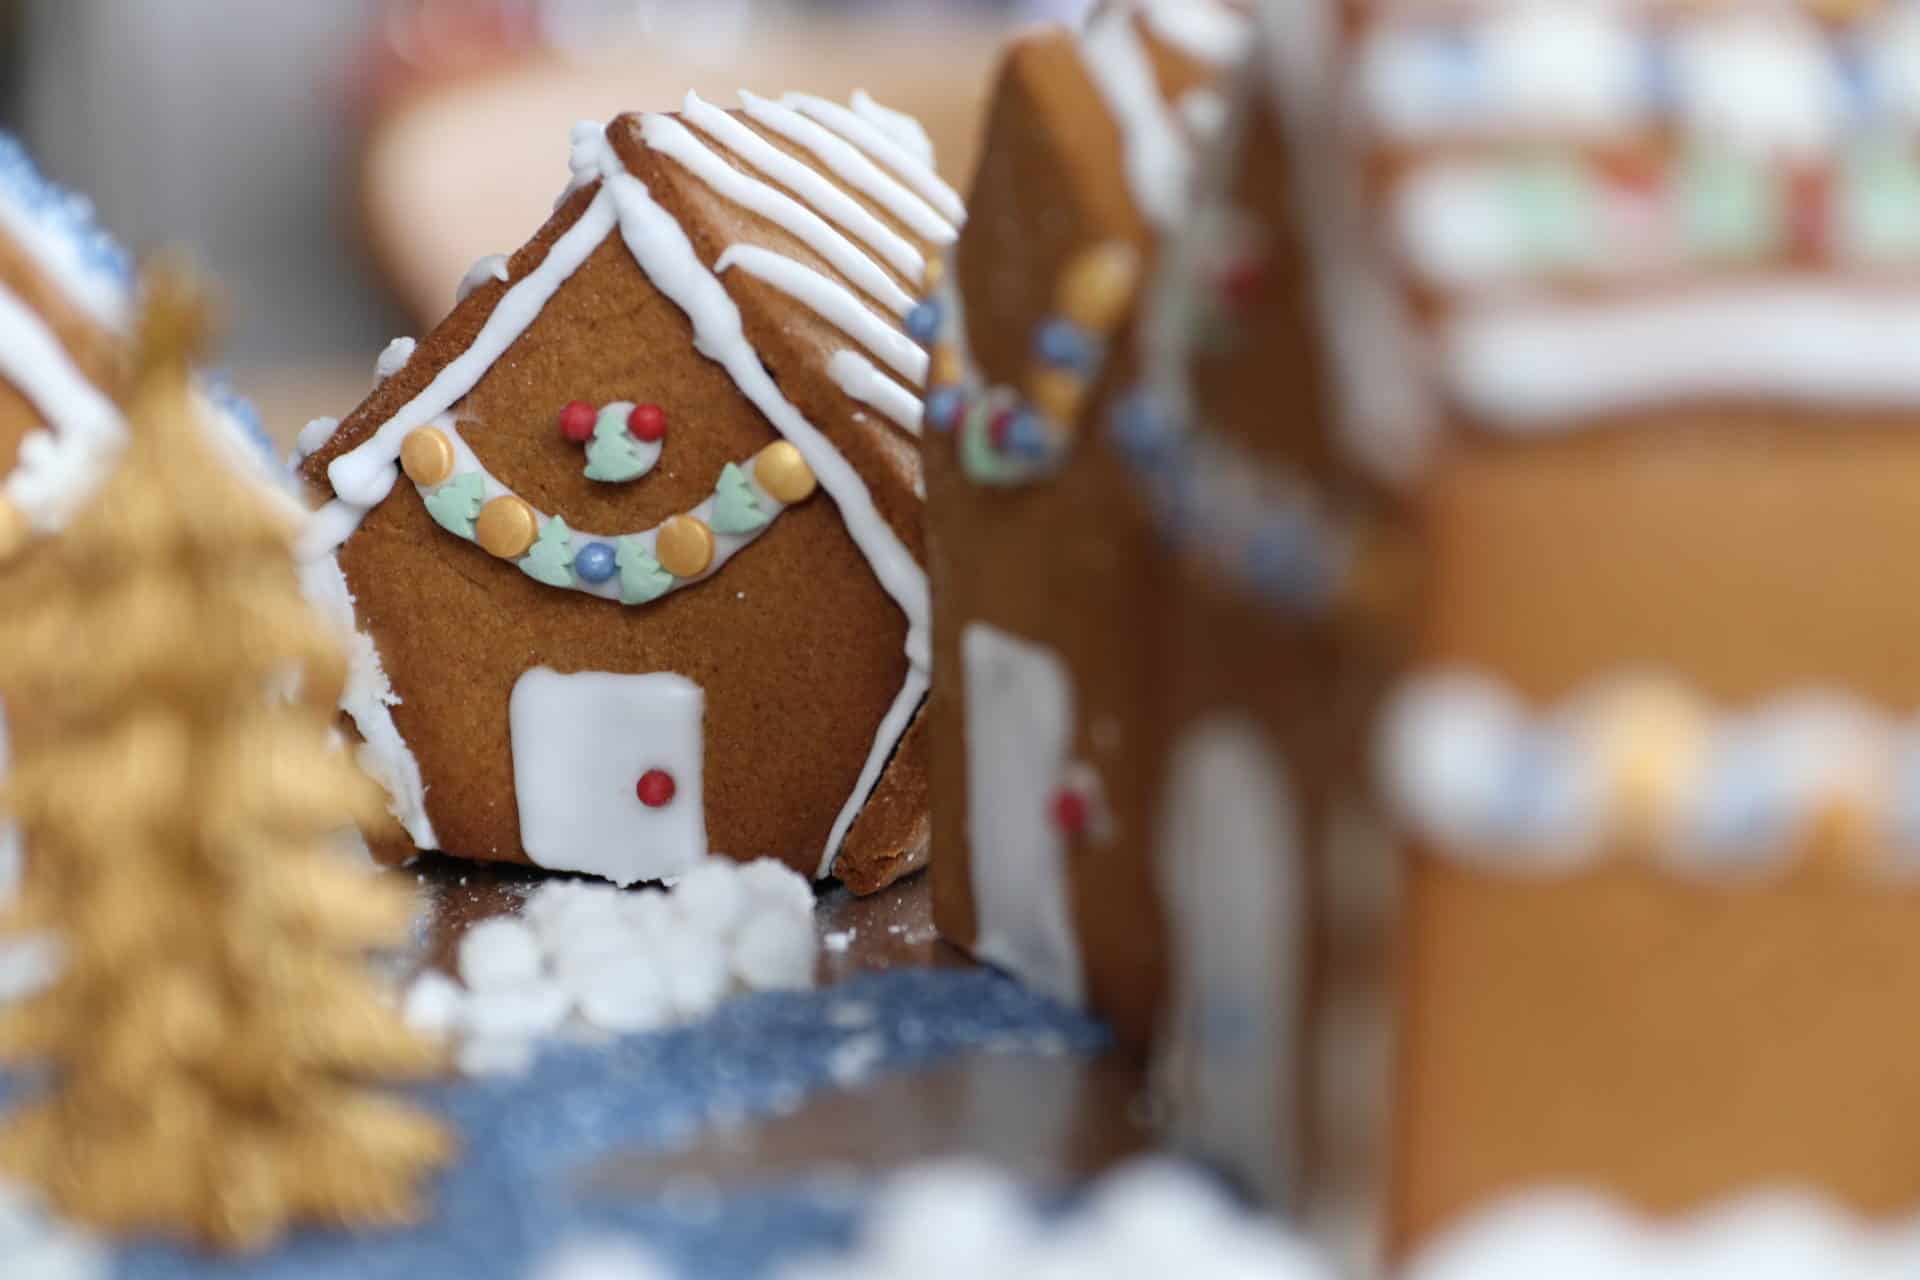 EASY Mini Gluten-Free Gingerbread Houses 